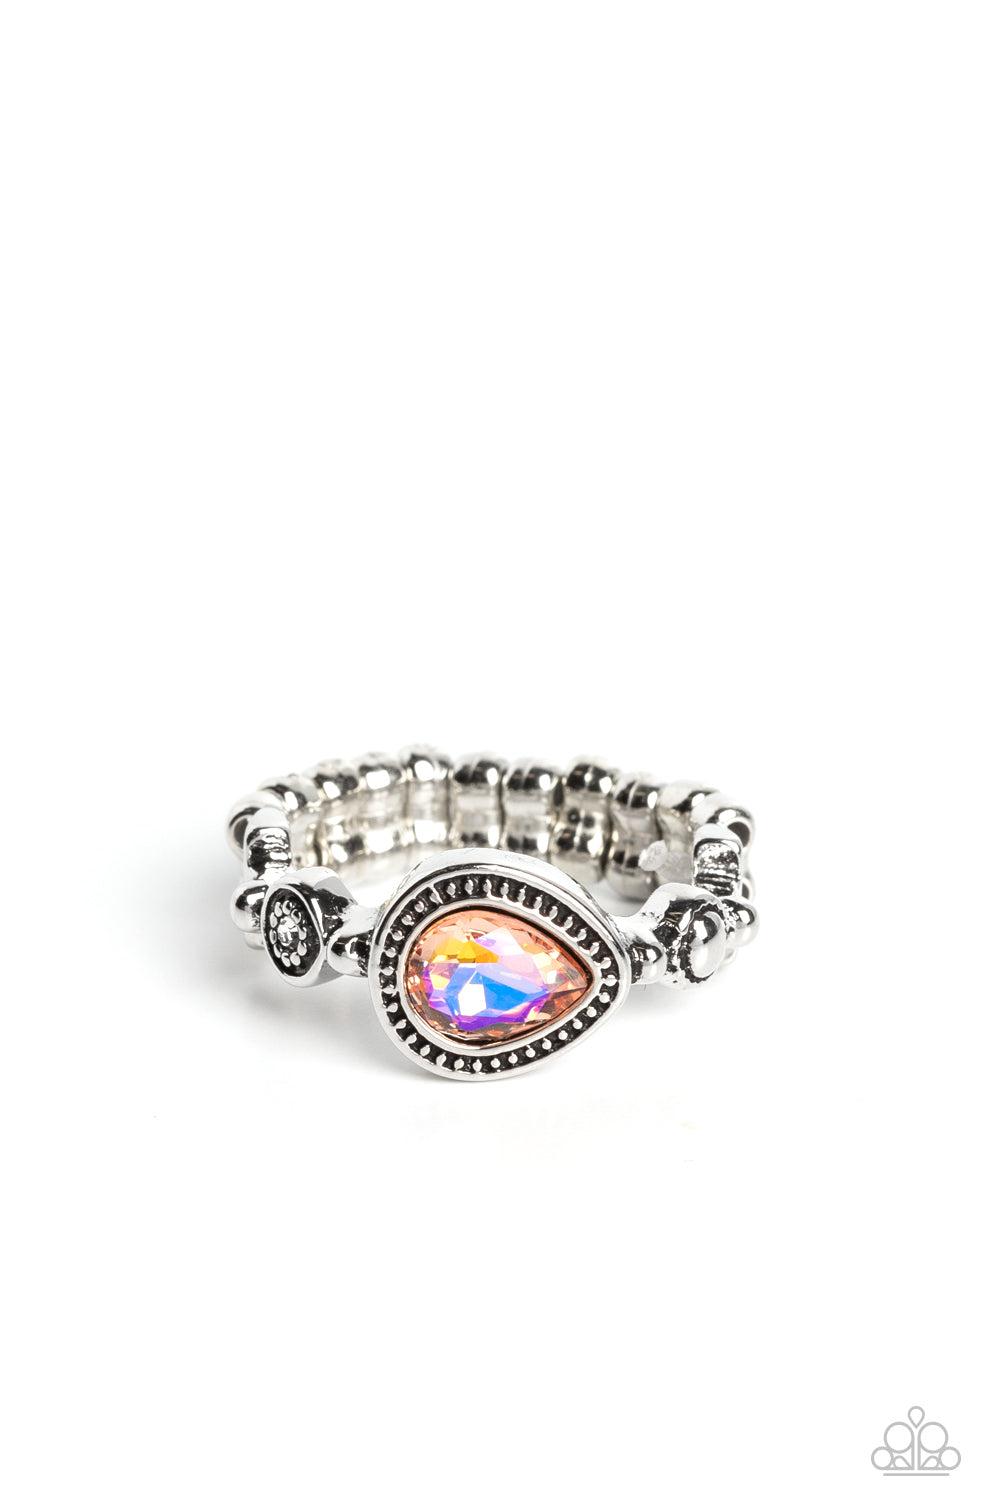 Artistic Artifact Orange Ring - Paparazzi Accessories- lightbox - CarasShop.com - $5 Jewelry by Cara Jewels